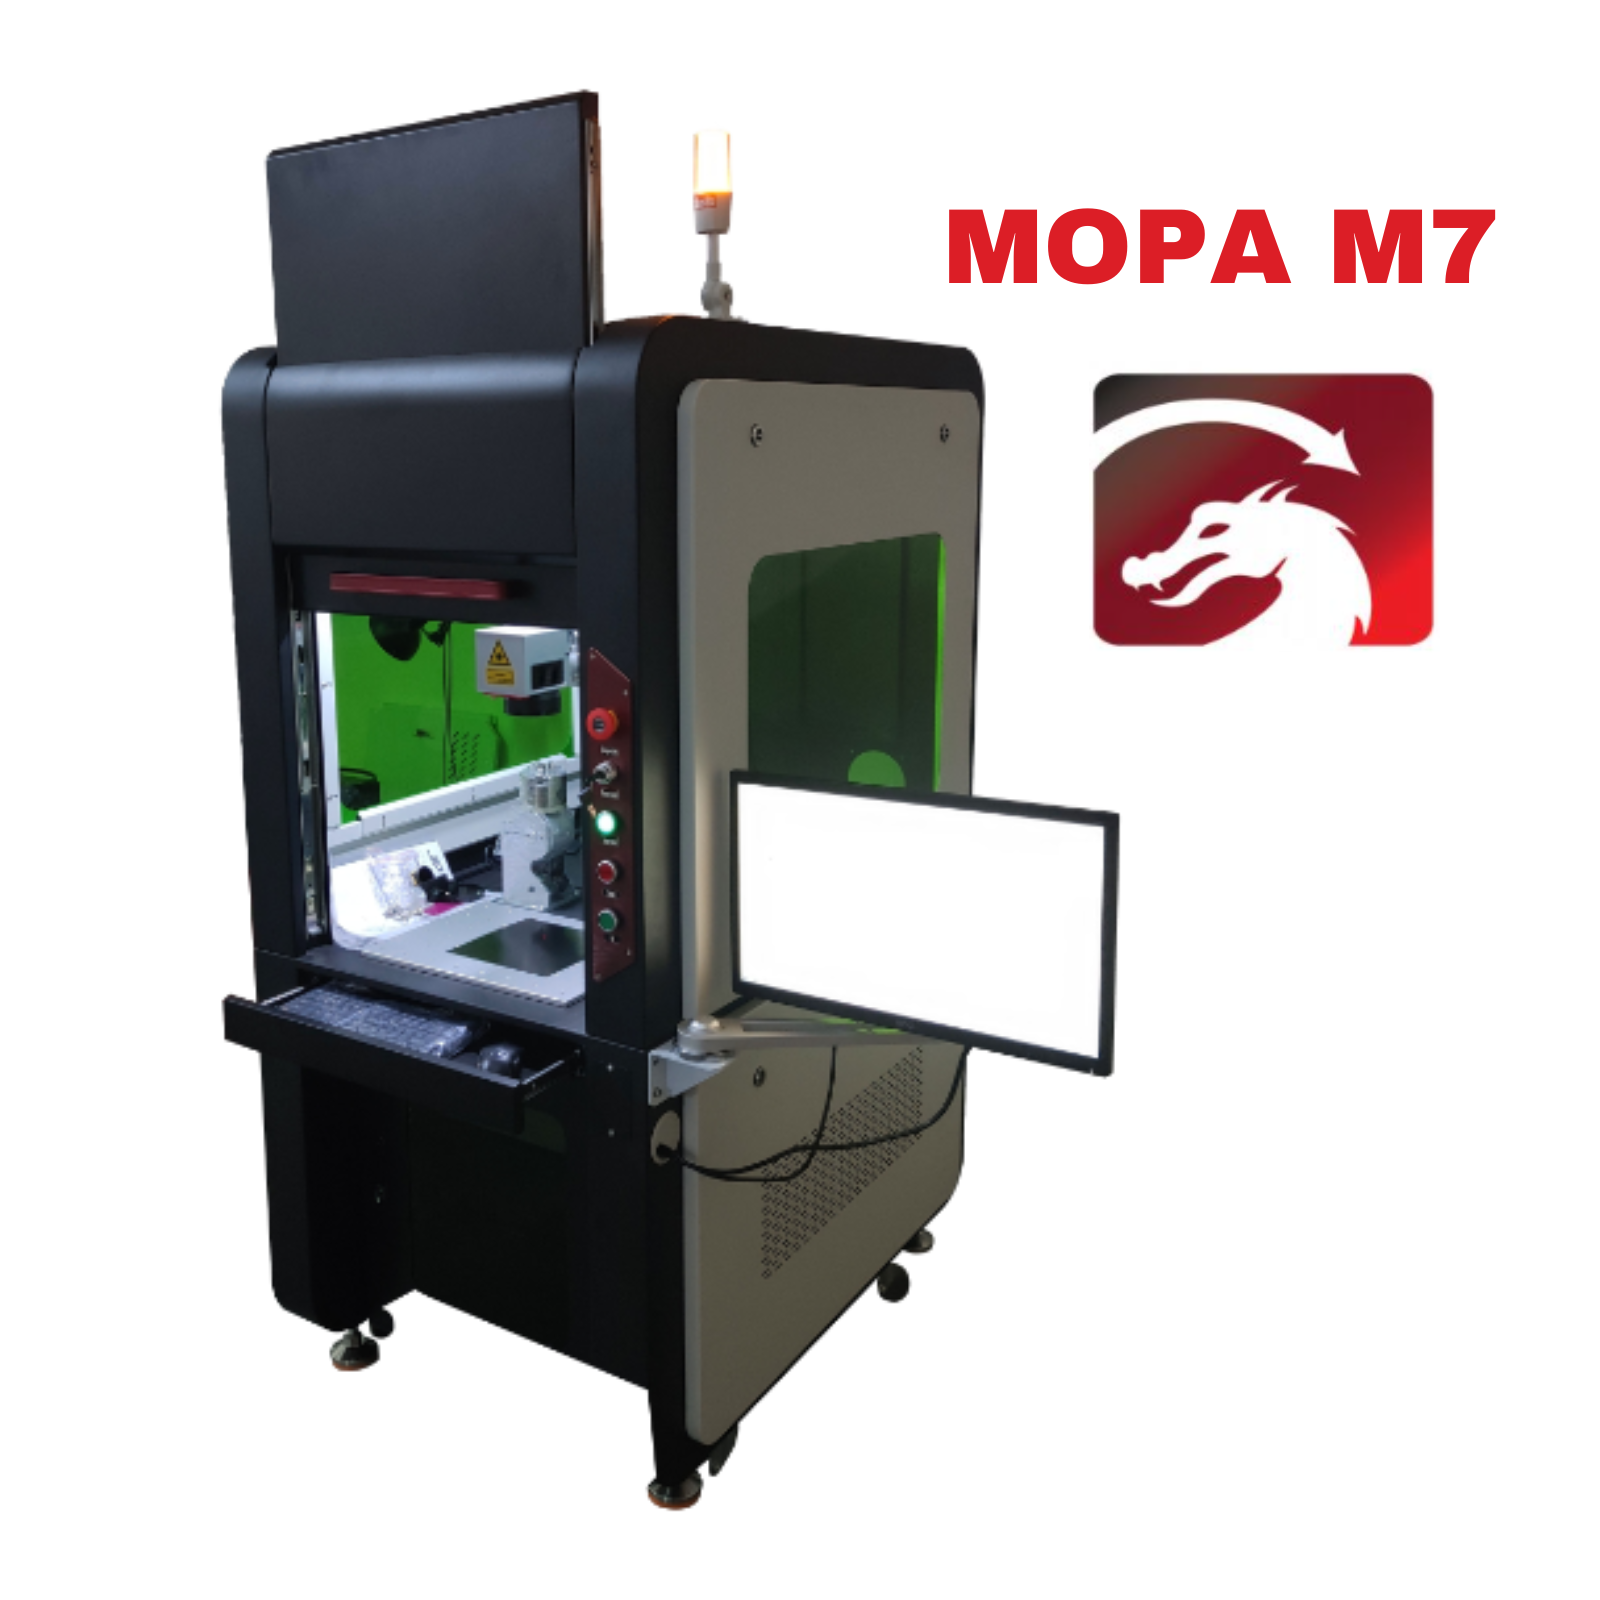 100W MOPA JPT M7 Fiber Laser Engraver